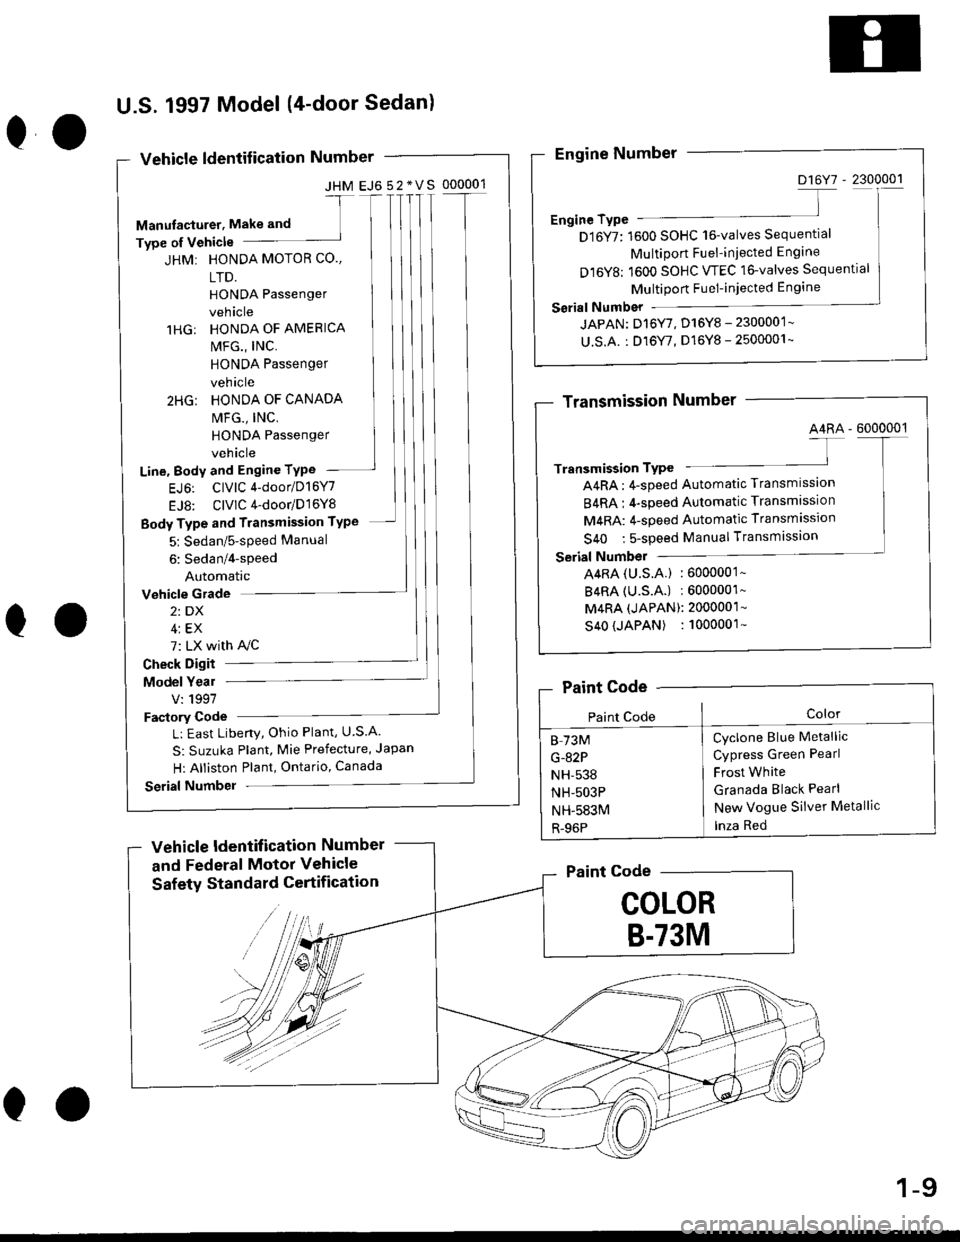 HONDA CIVIC 1996 6.G Workshop Manual 00
U.S. 1997 Model (4-door Sedanl
Vehicle ldentif ication Number
JHM EJ6 52*VS 000001
Manulaqturer. Make and 
-t
Type of Vehicle
HONDA MOTOR CO.,
LTD.
HONDA Passenger
vehicle
HONDA OF AMERICA
MFG., IN